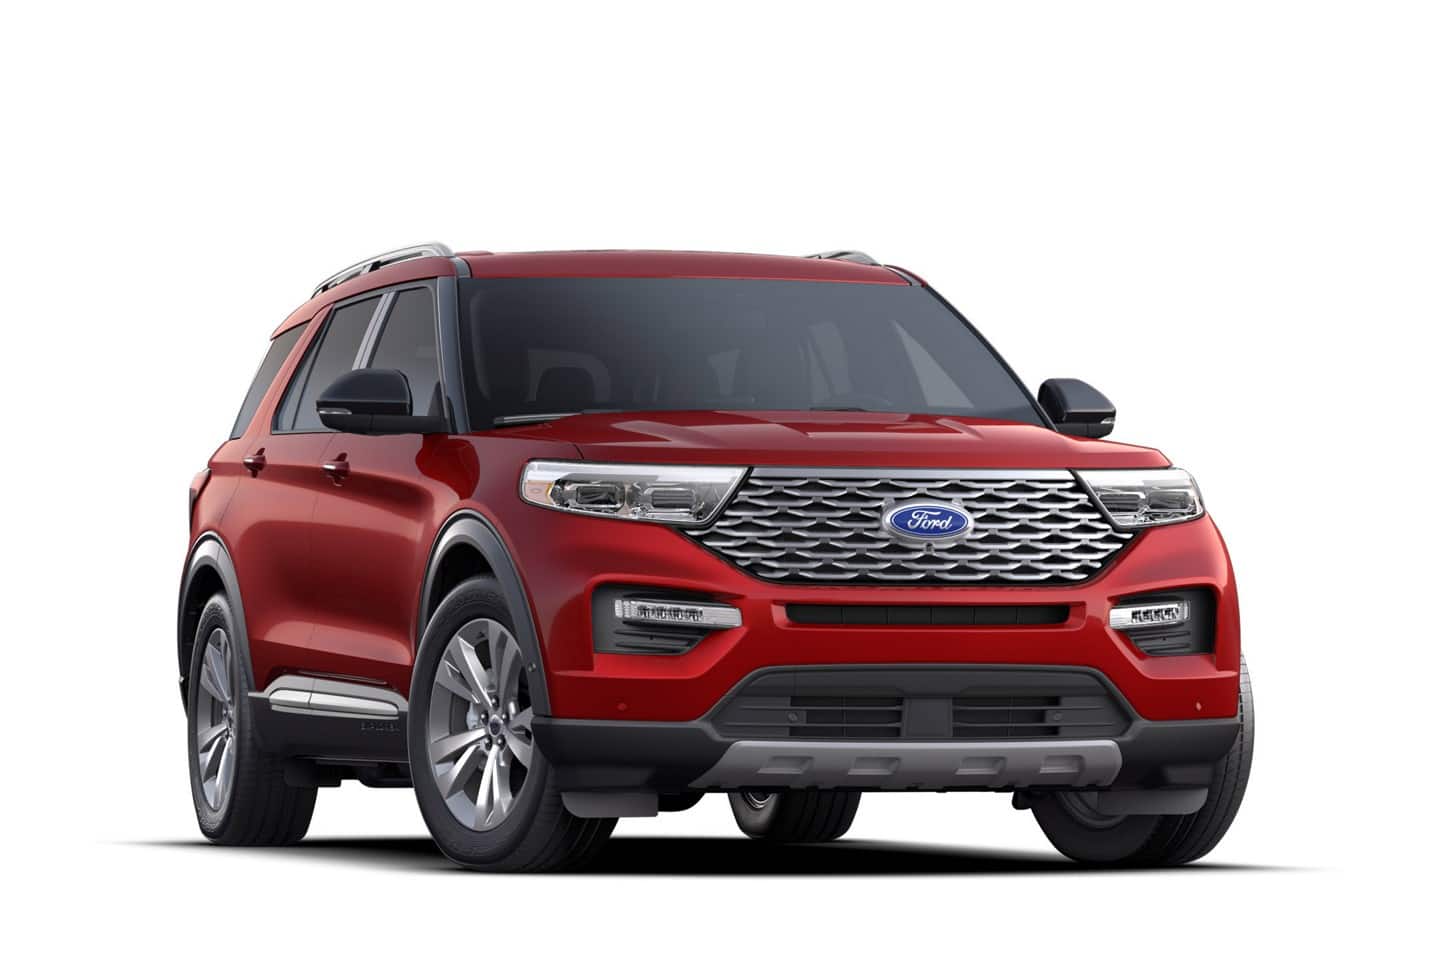 2020 Ford® Explorer Platinum SUV | Model Highlights | Ford.com